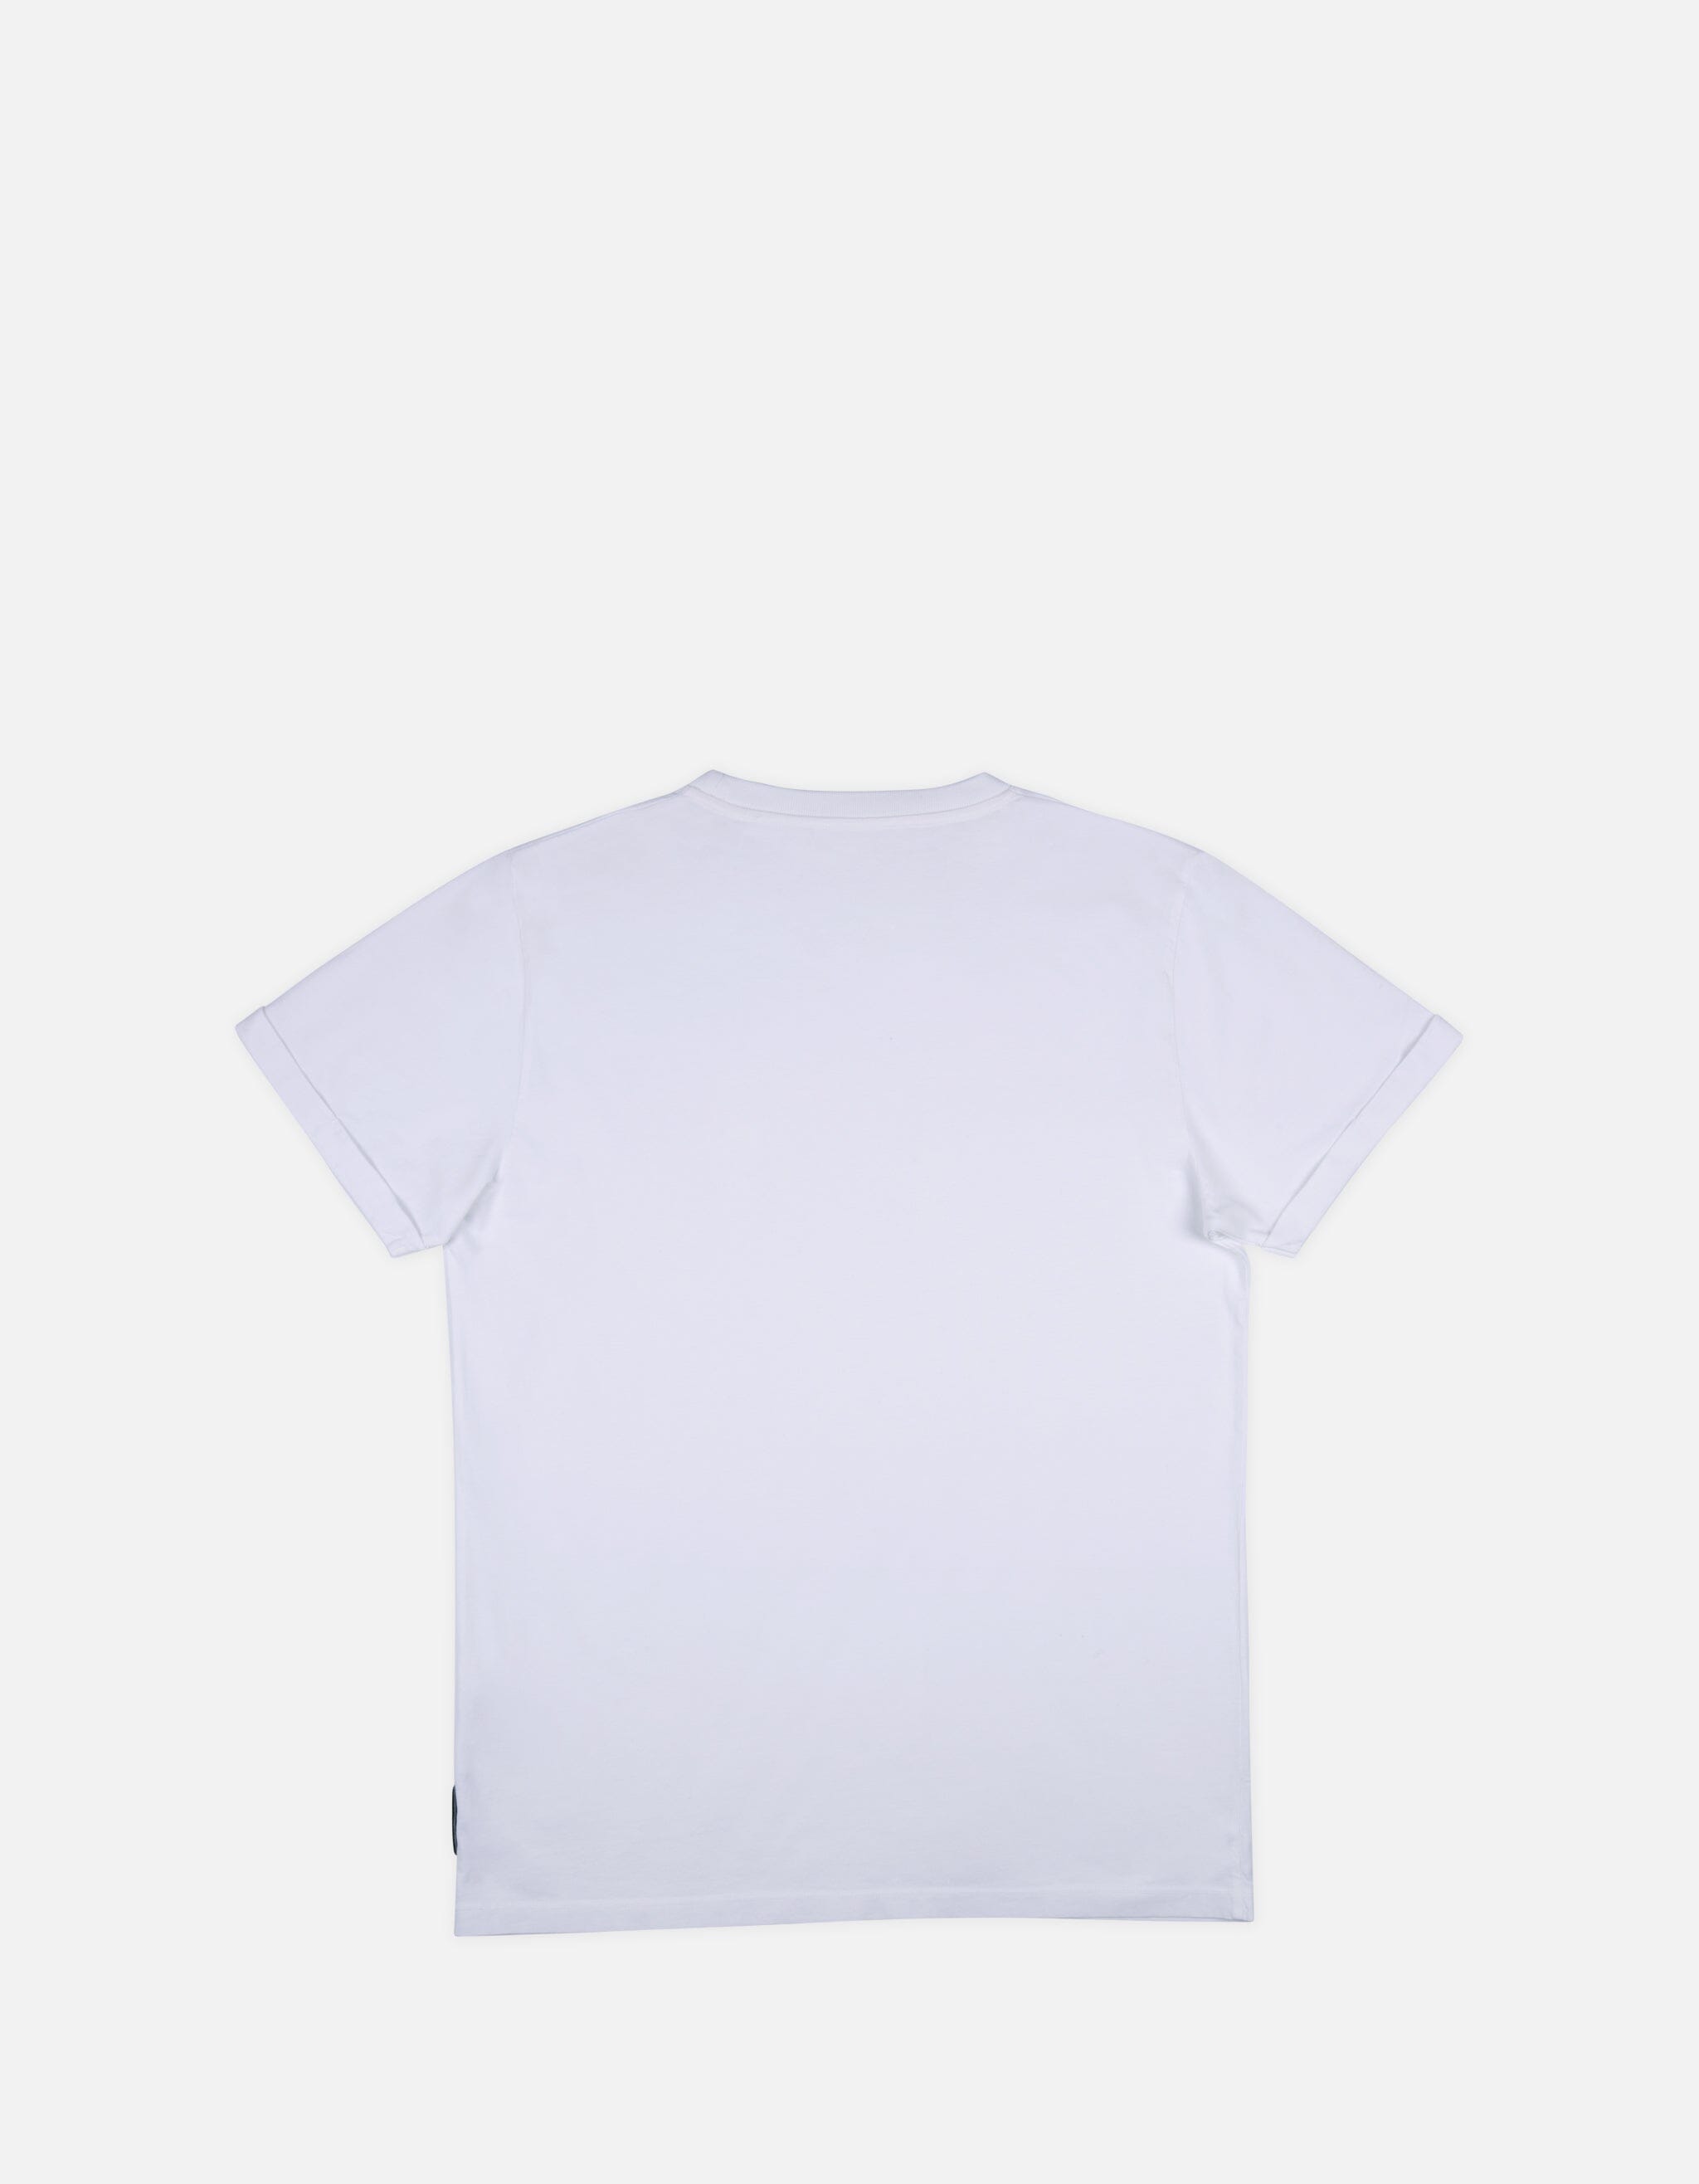 Jofe - 03. White - Embroidered T-Shirts - Jofe MACKEENE 